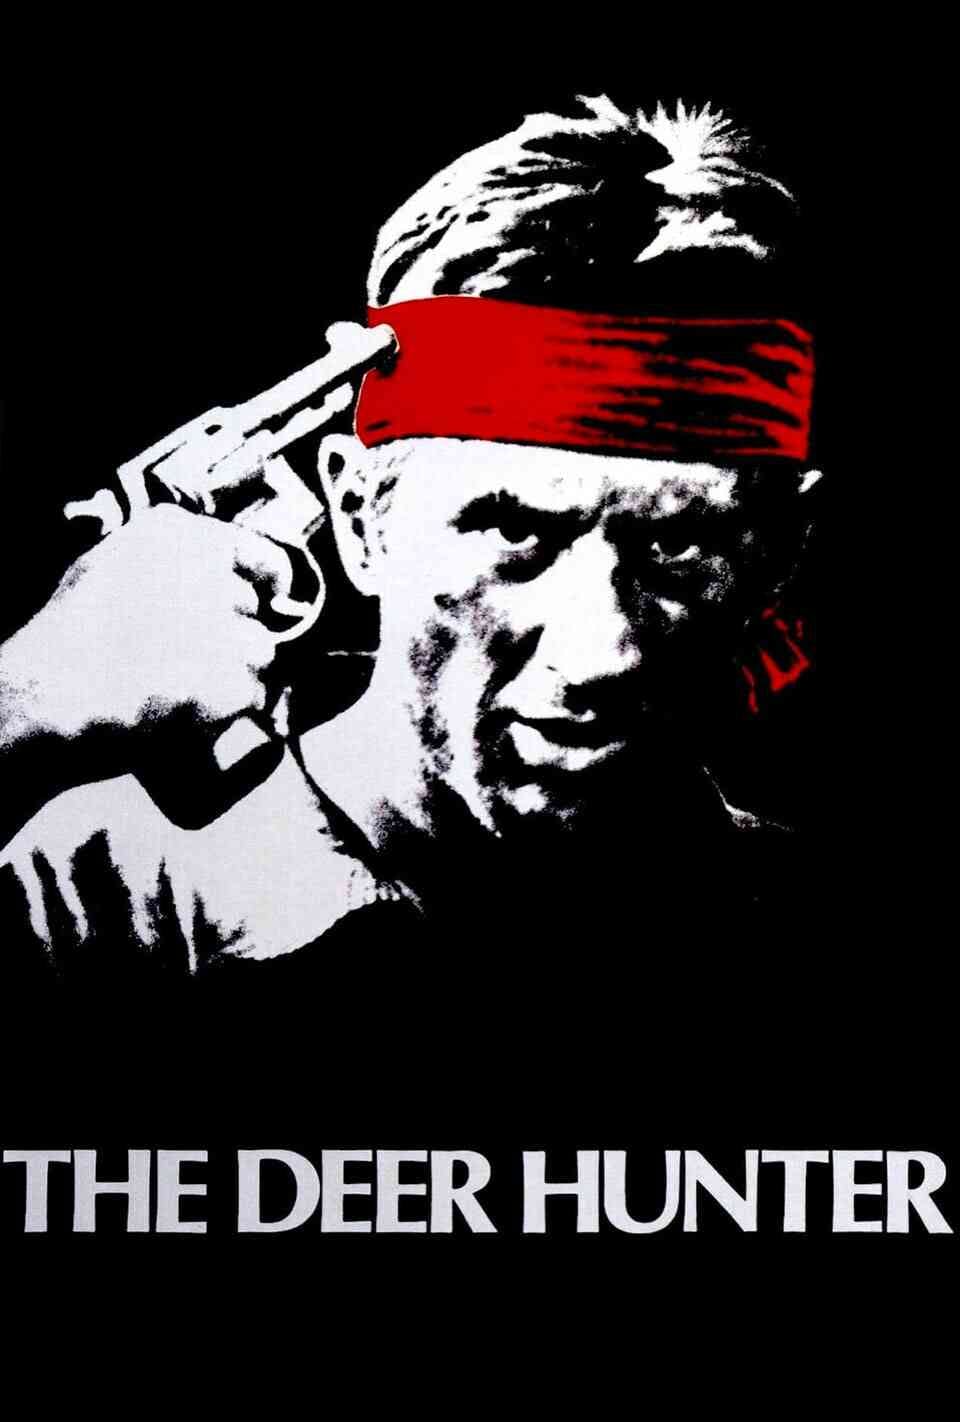 Read The Deer Hunter screenplay (poster)